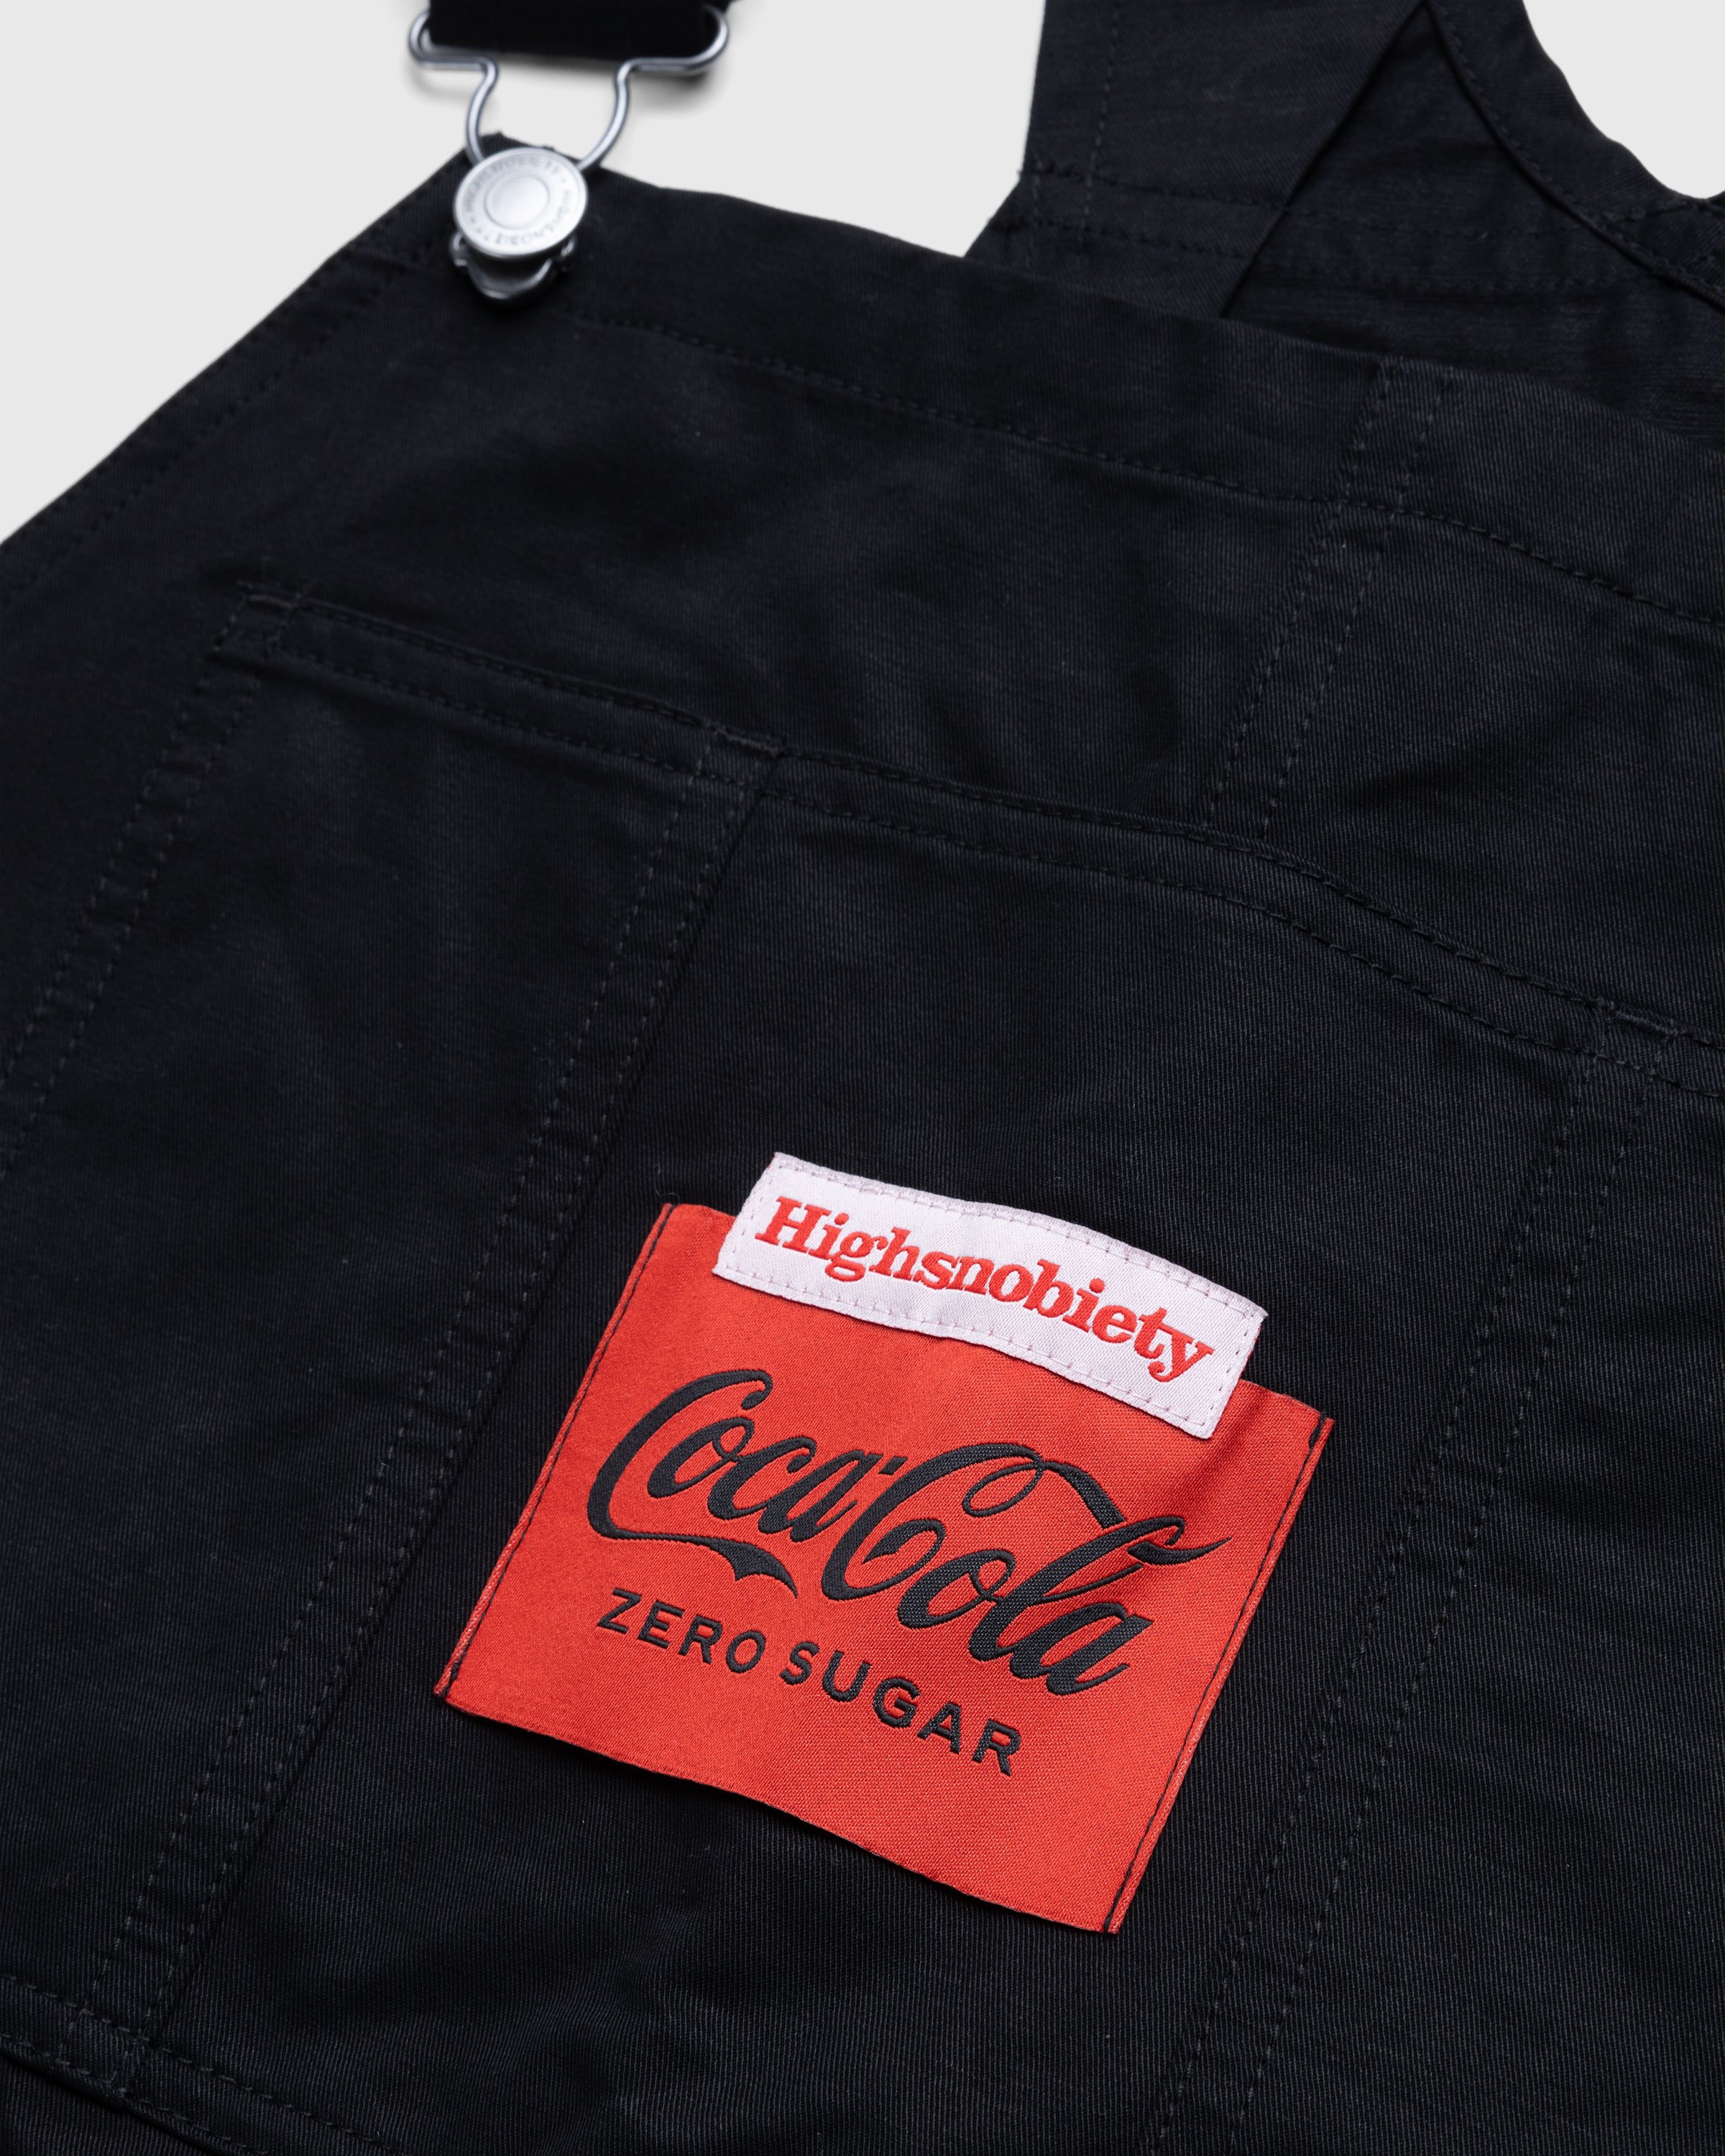 Highsnobiety x Coca-Cola Zero Sugar - Dungarees - Clothing - Black - Image 7